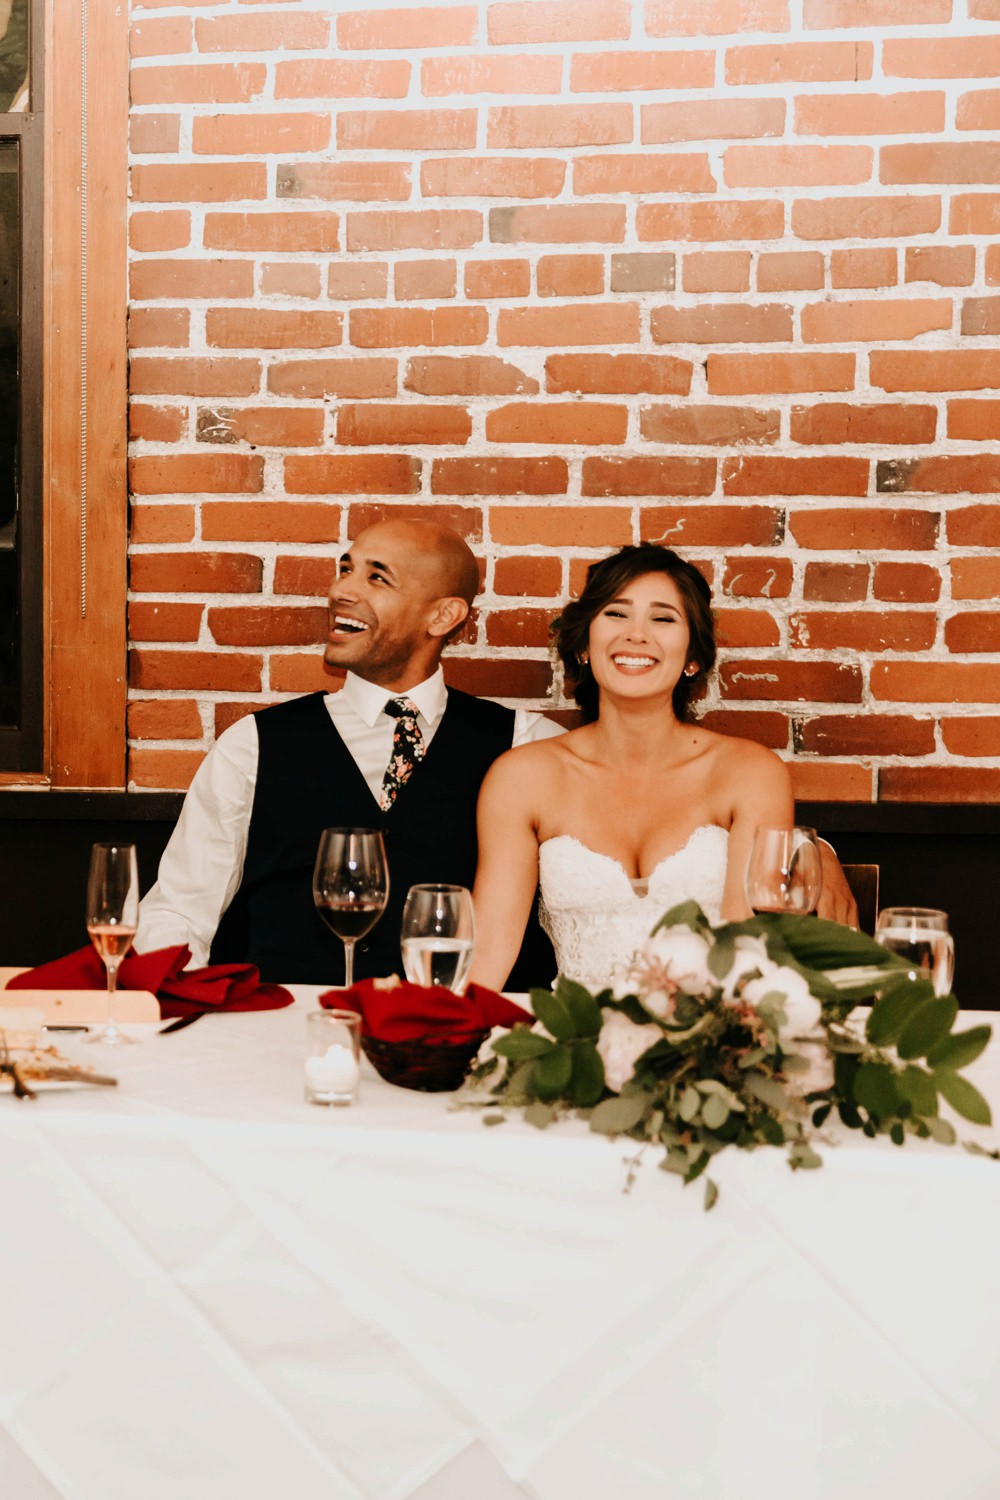 Portland Oregon Wedding Photographer | https://alexandriamonette.com